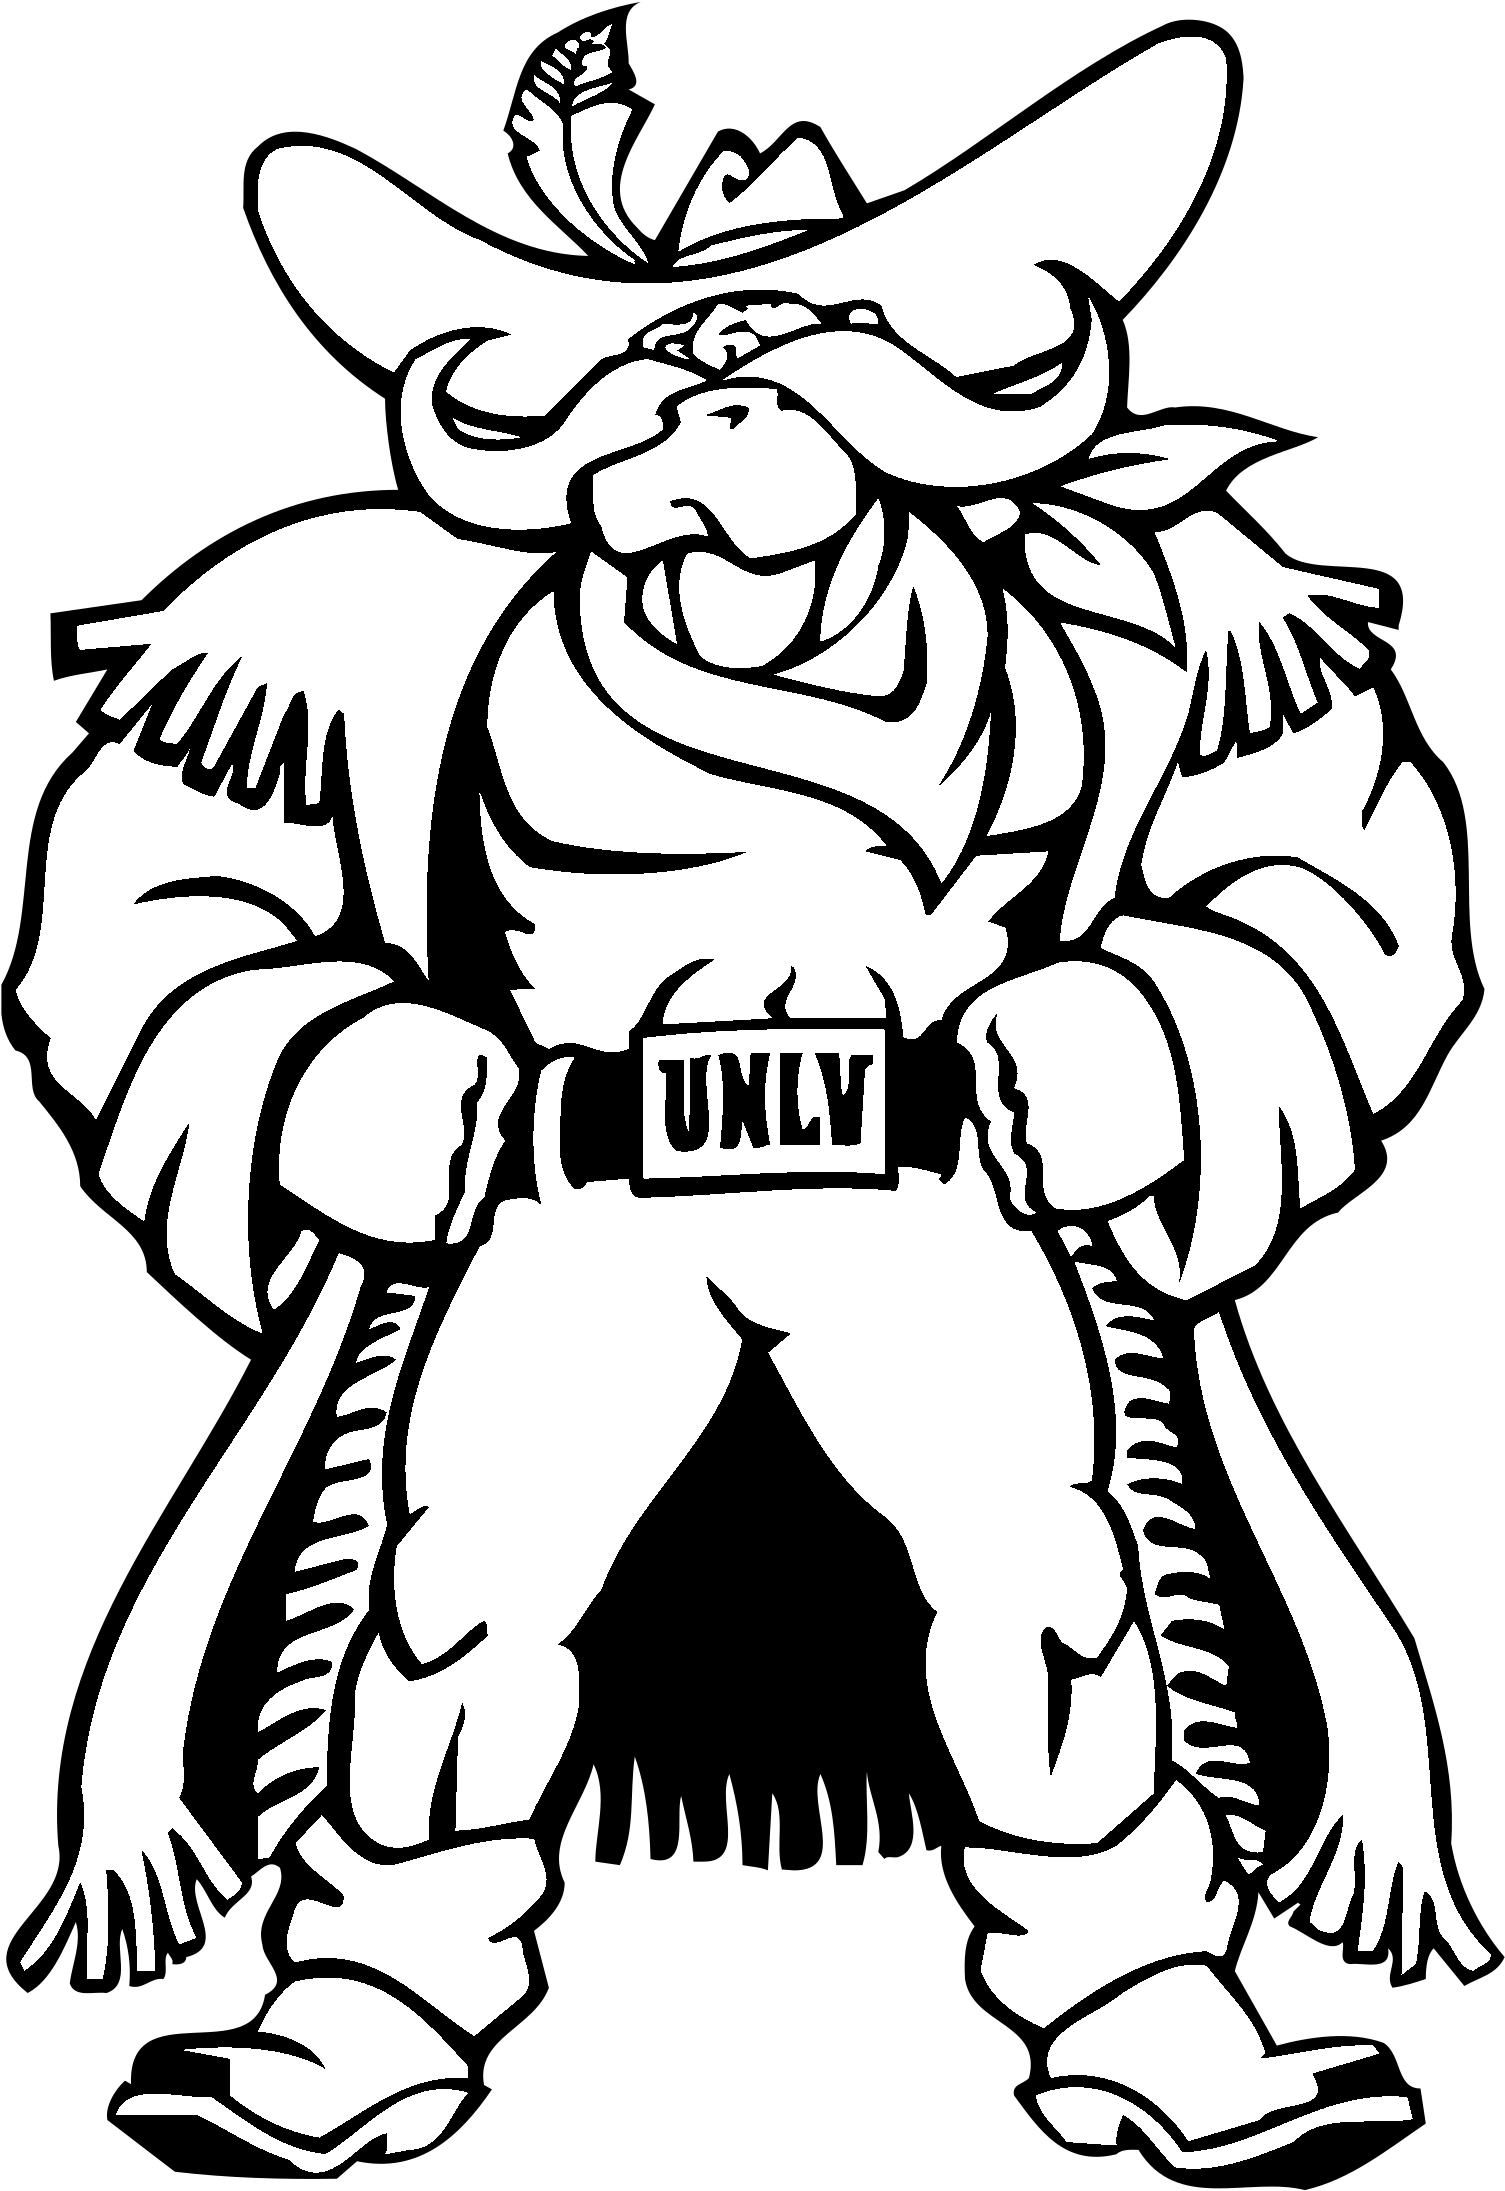 Unlv Rebels Logo Black And White - Unlv Rebels (2400x2400), Png Download